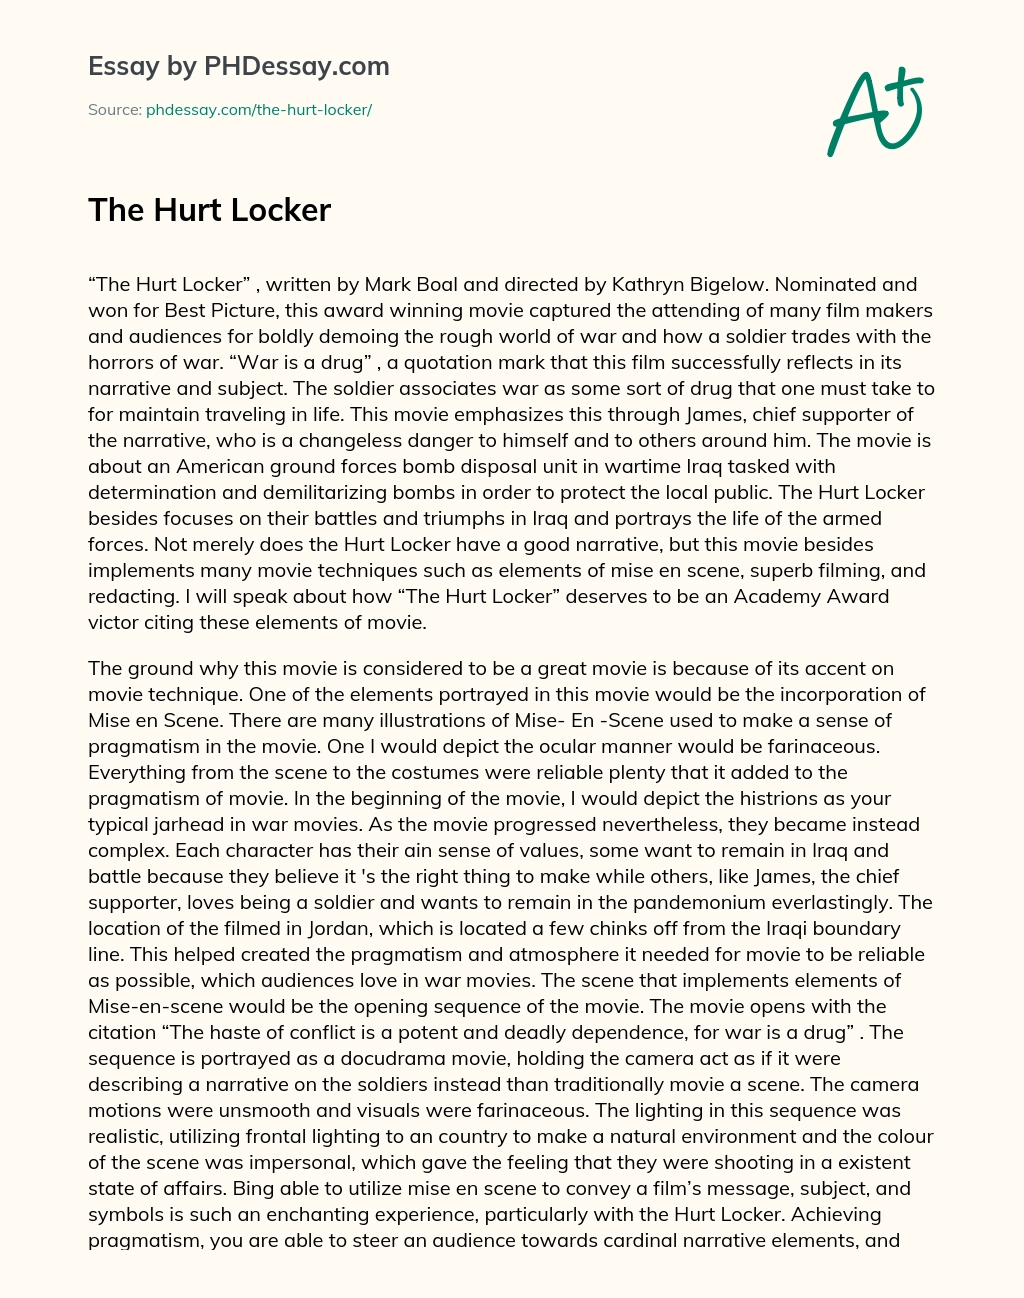 The Hurt Locker essay